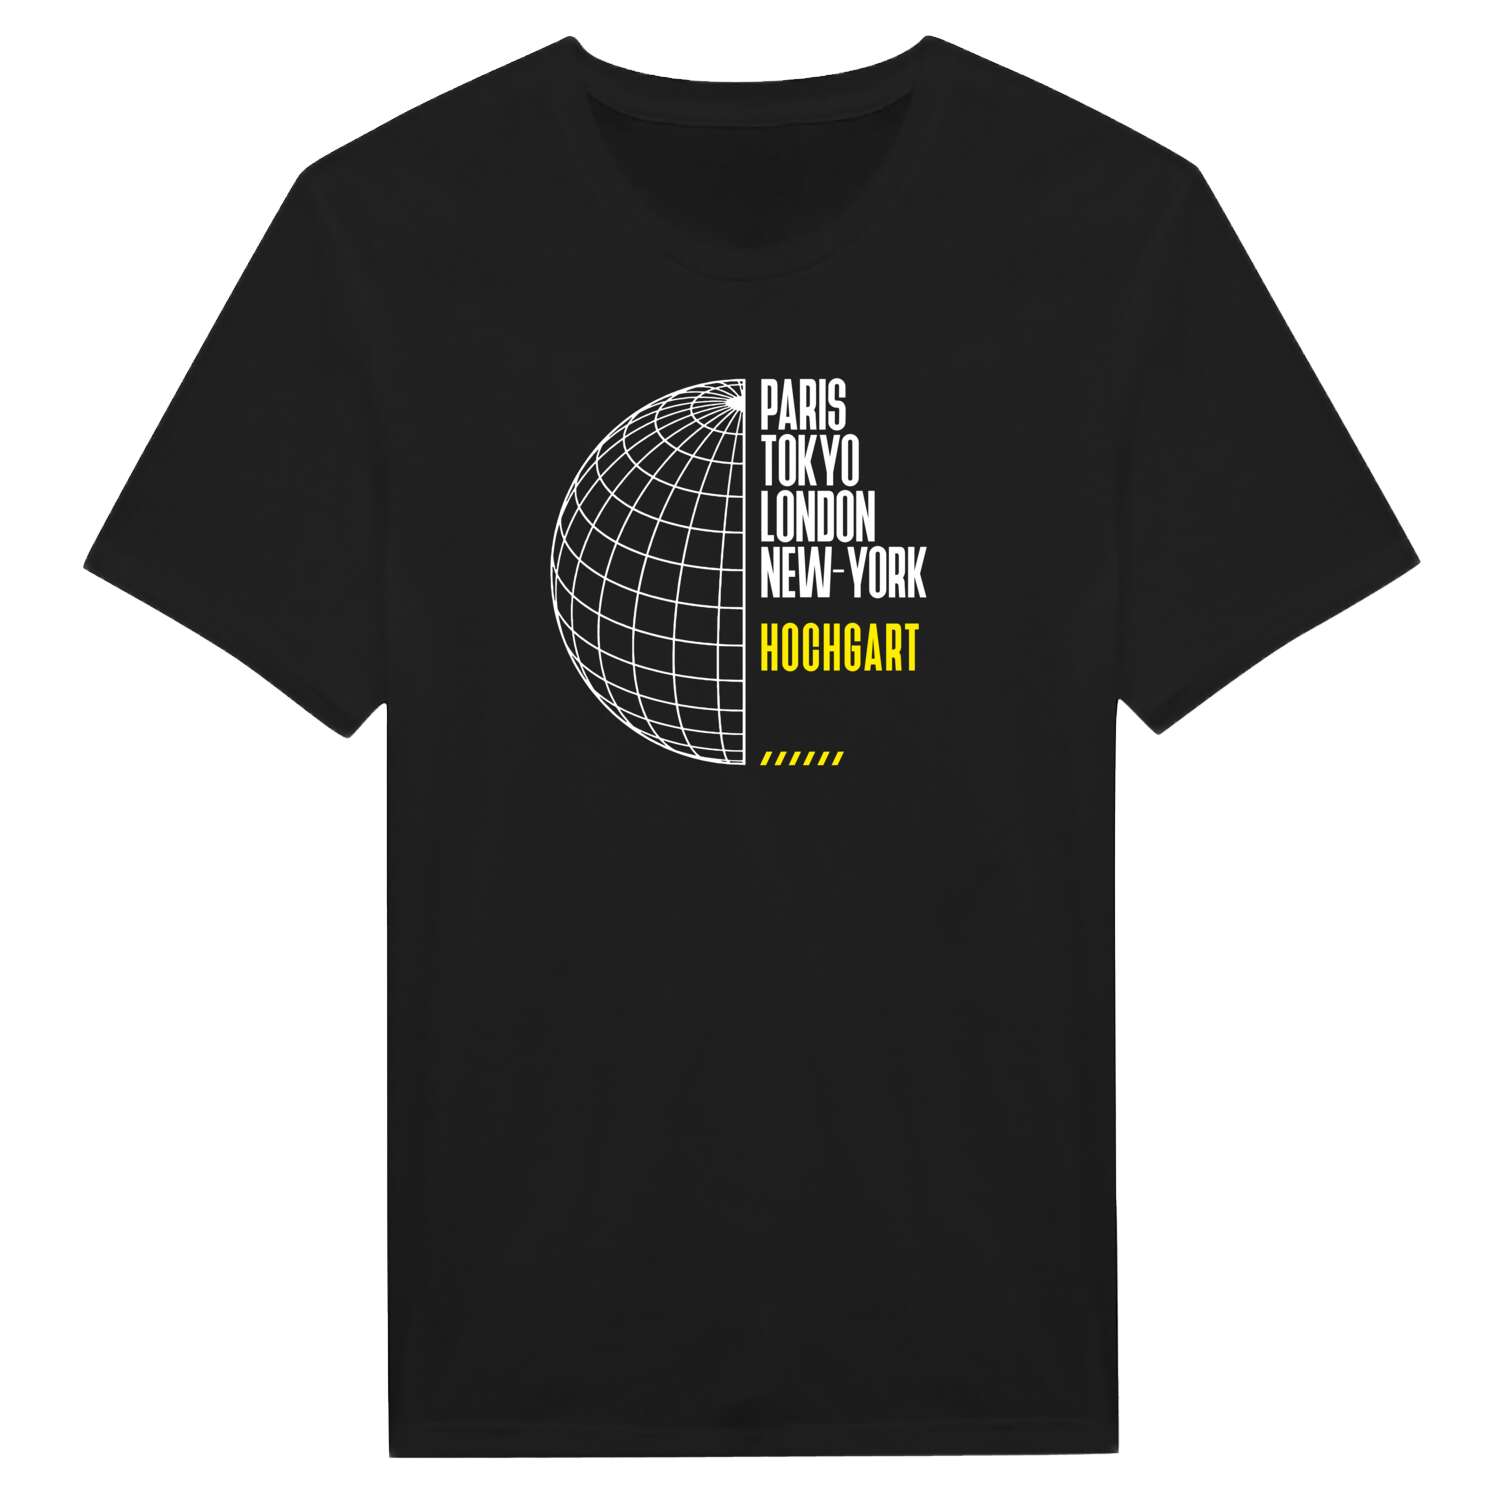 Hochgart T-Shirt »Paris Tokyo London«